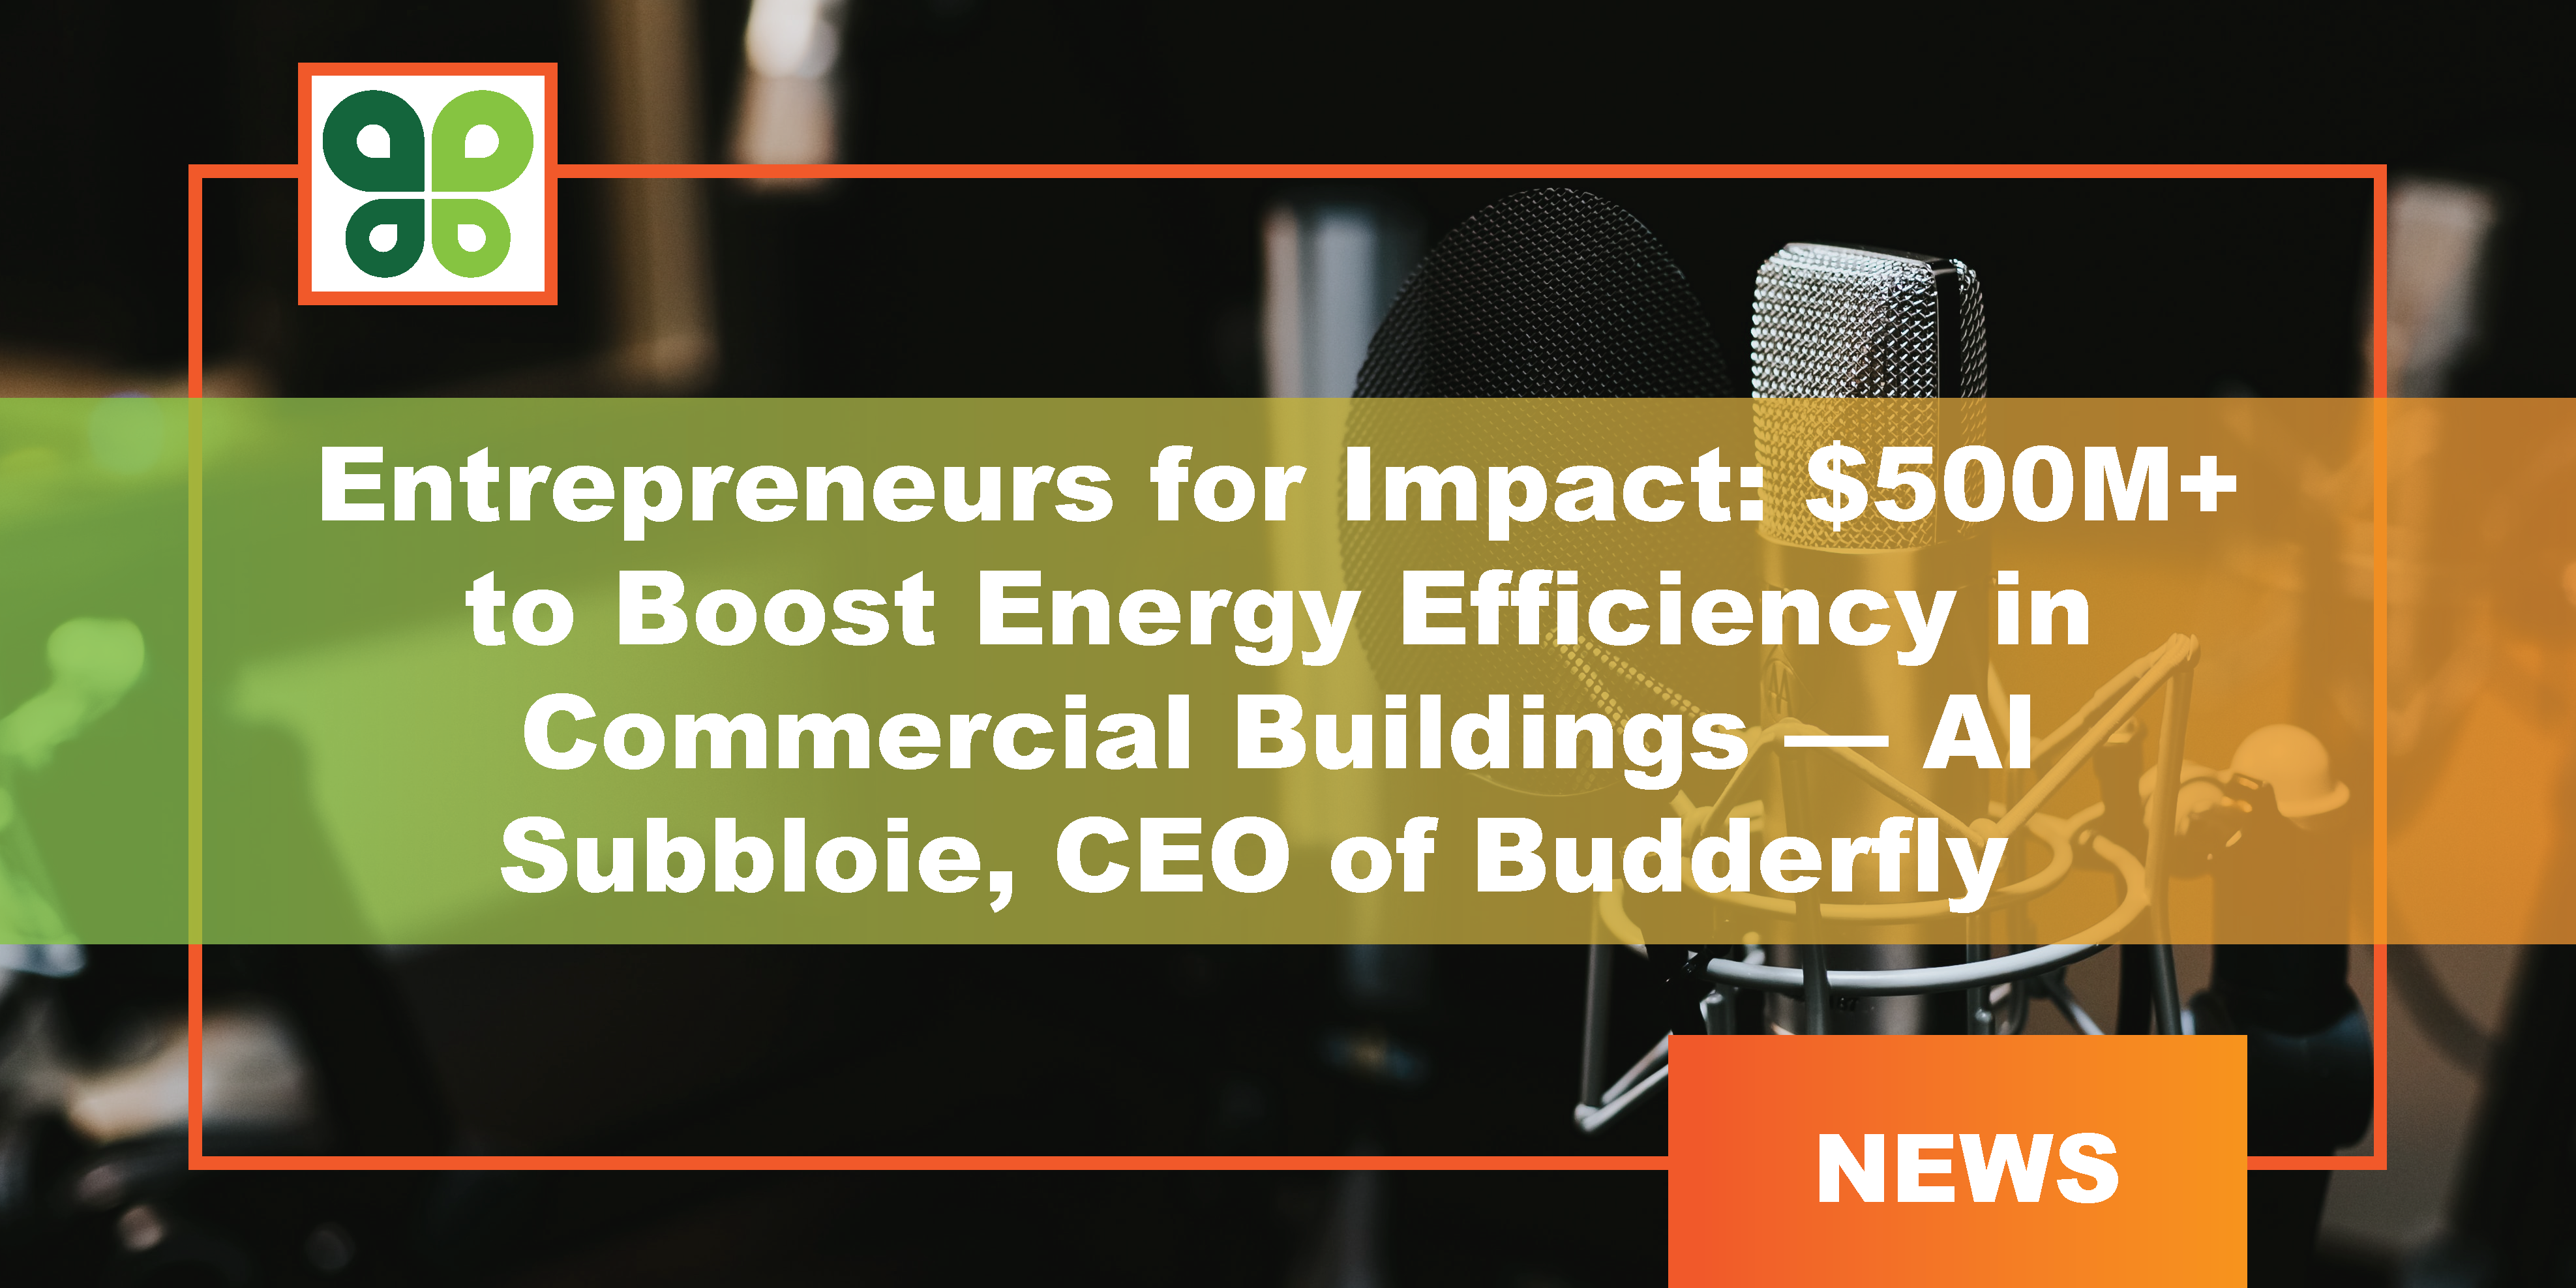 Entrepreneurs for Impact Podcast Interviews Budderfly CEO Al Subbloie